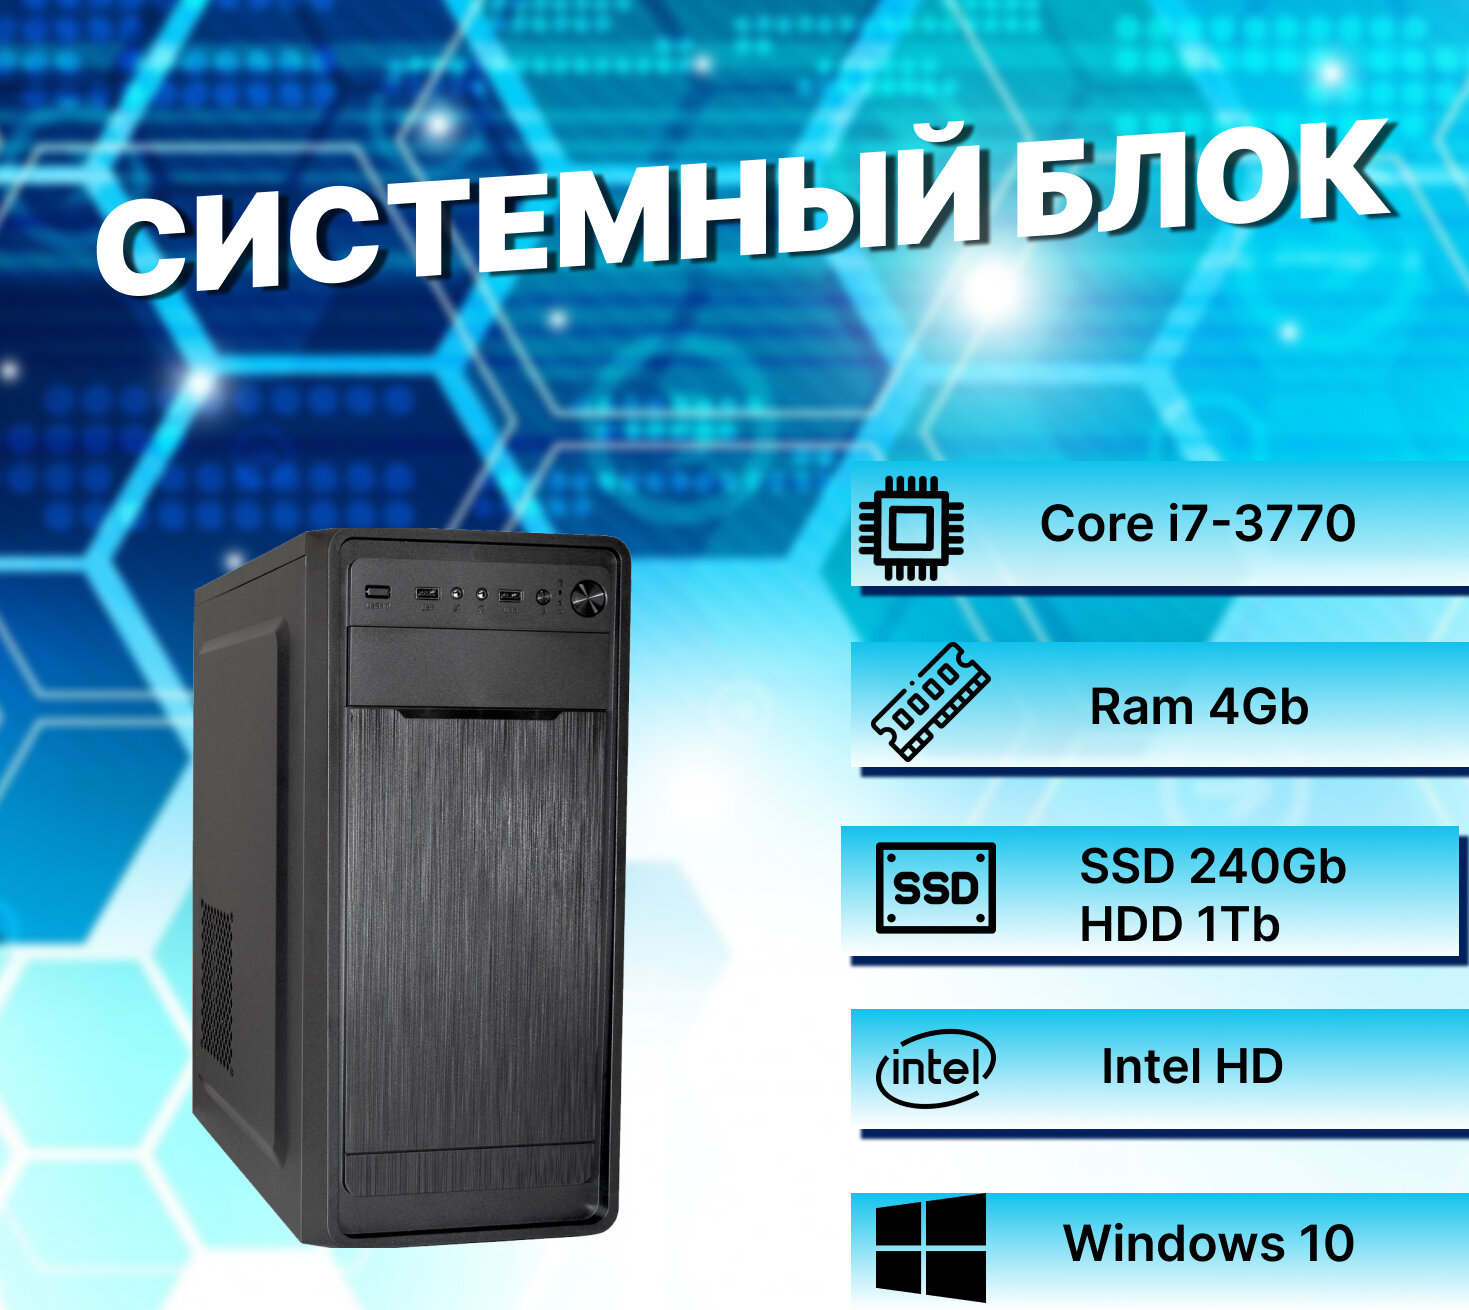 Системный блок Intel Core I7-3770 (3.4ГГц)/ RAM 4Gb/ SSD 240Gb/ HDD 1Tb/ Intel HD/ Windows 10 Pro